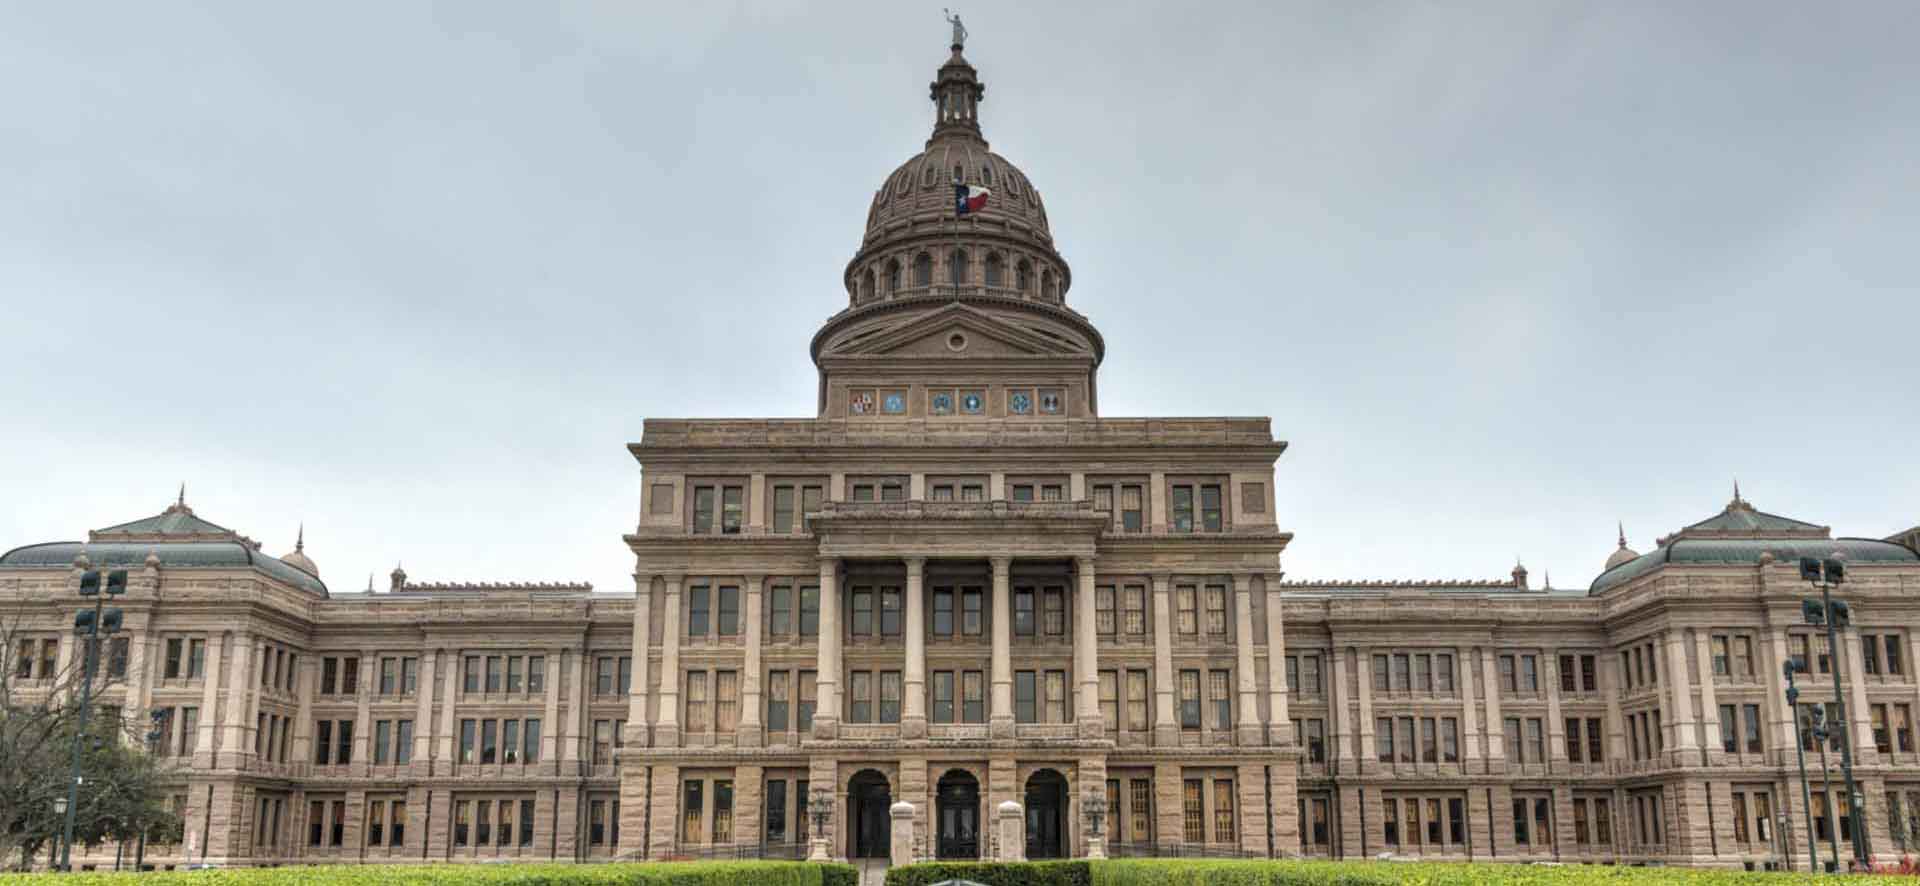 Austin State Capitol